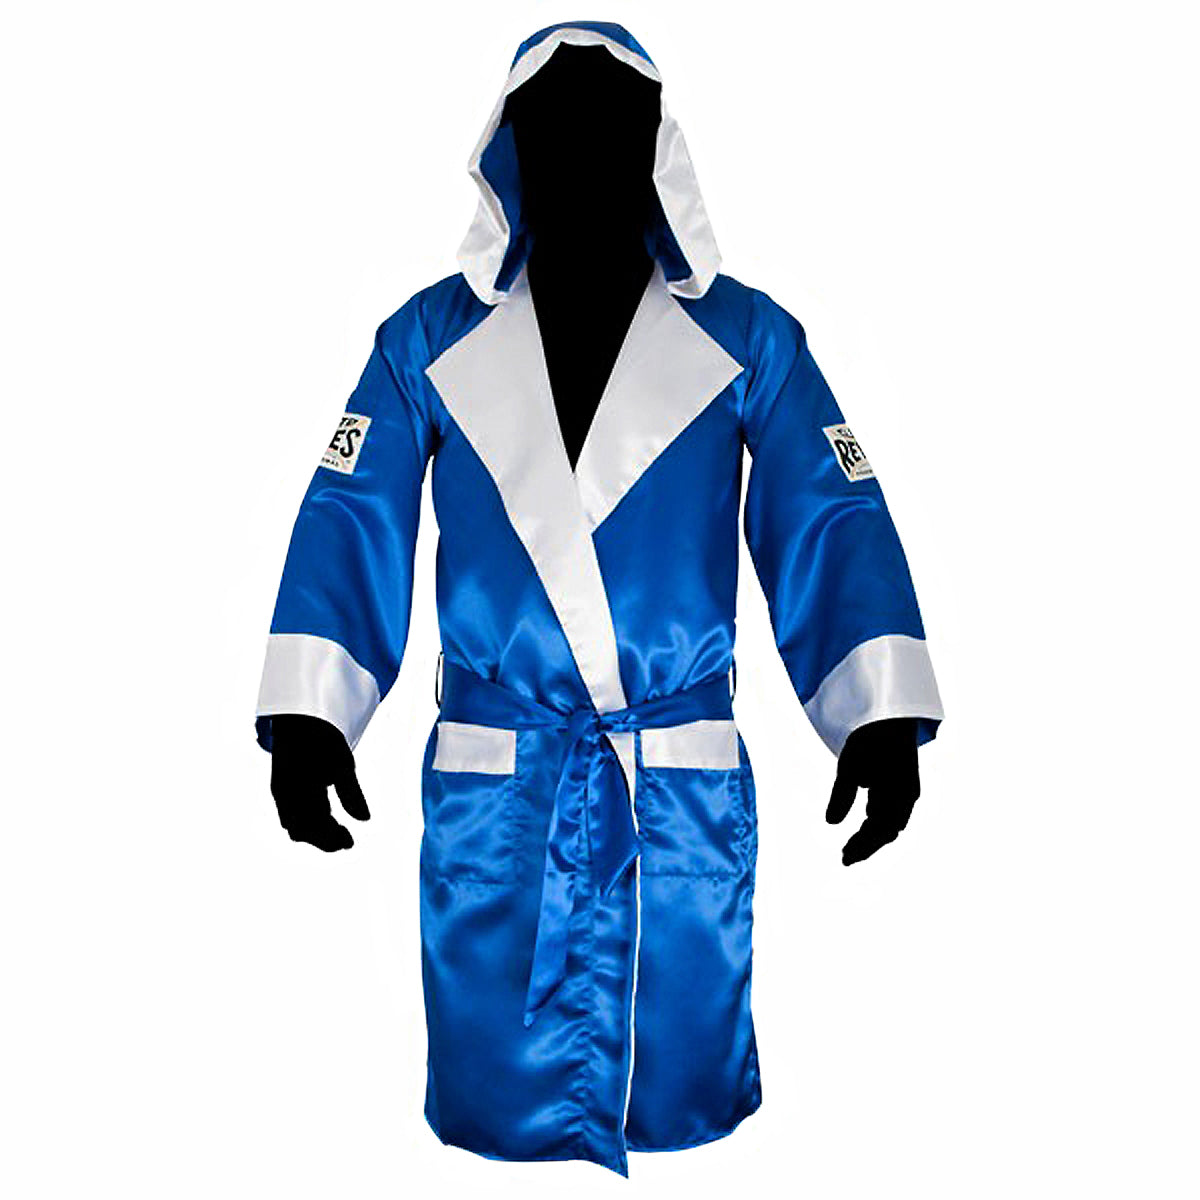 Cleto Reyes Satin Boxing Robe with Hood - Medium - Blue/White Cleto Reyes